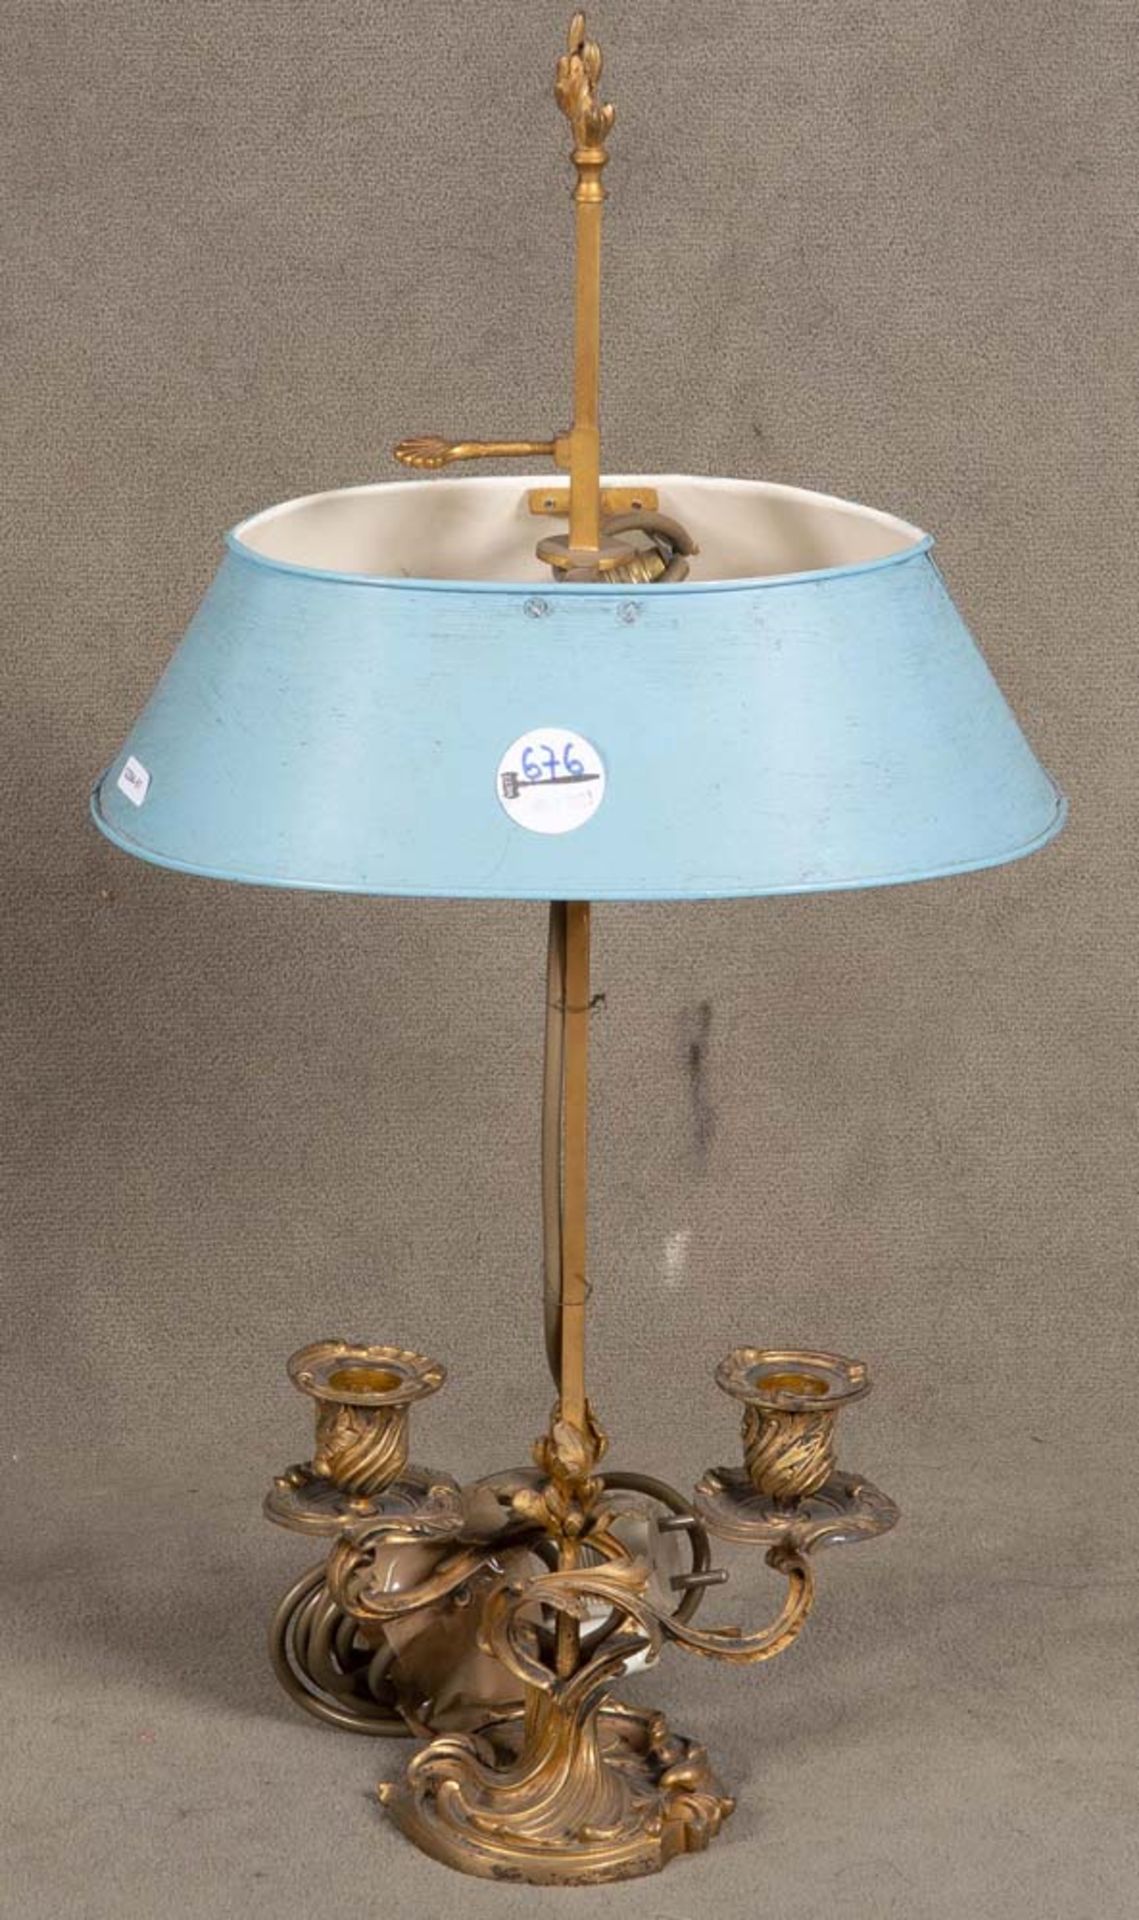 Bouillotte-Lampe. Paris 19. Jh. Bronze, vergoldet, Metallschirm, in der Höhe verstellbar.